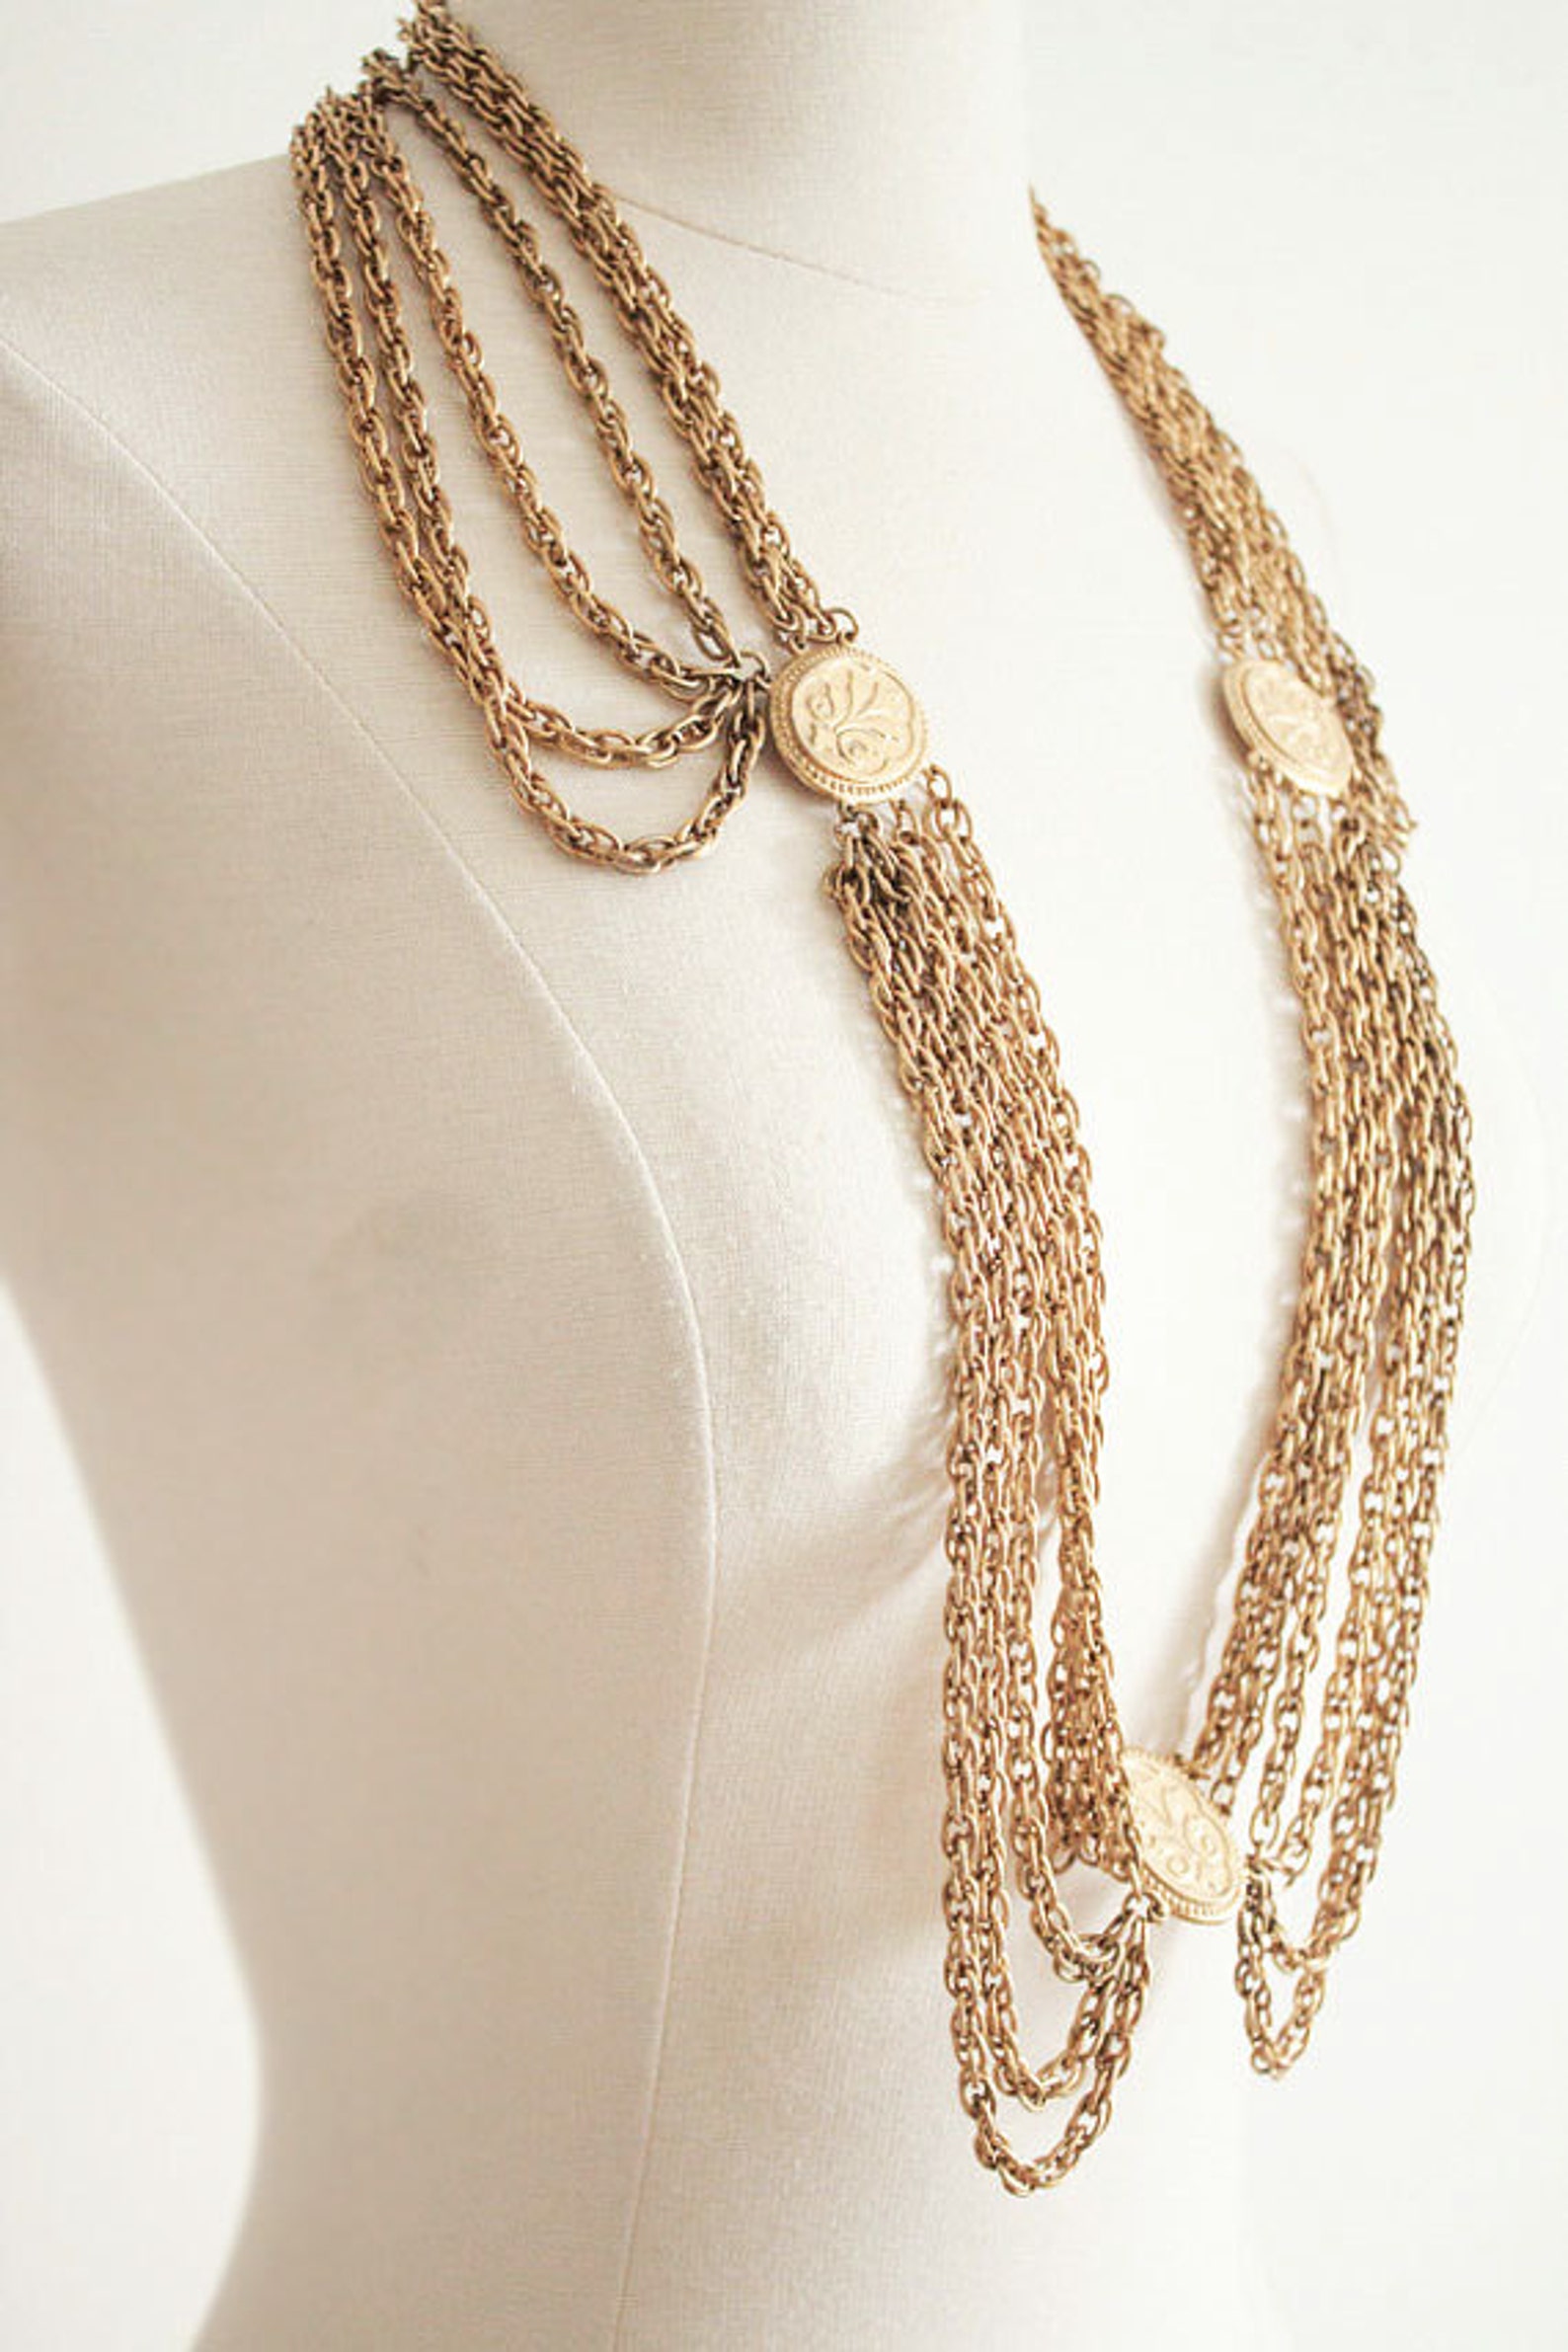 Draped Festoon Necklace. Gold Tone. Multi Chain. 1970s | Etsy